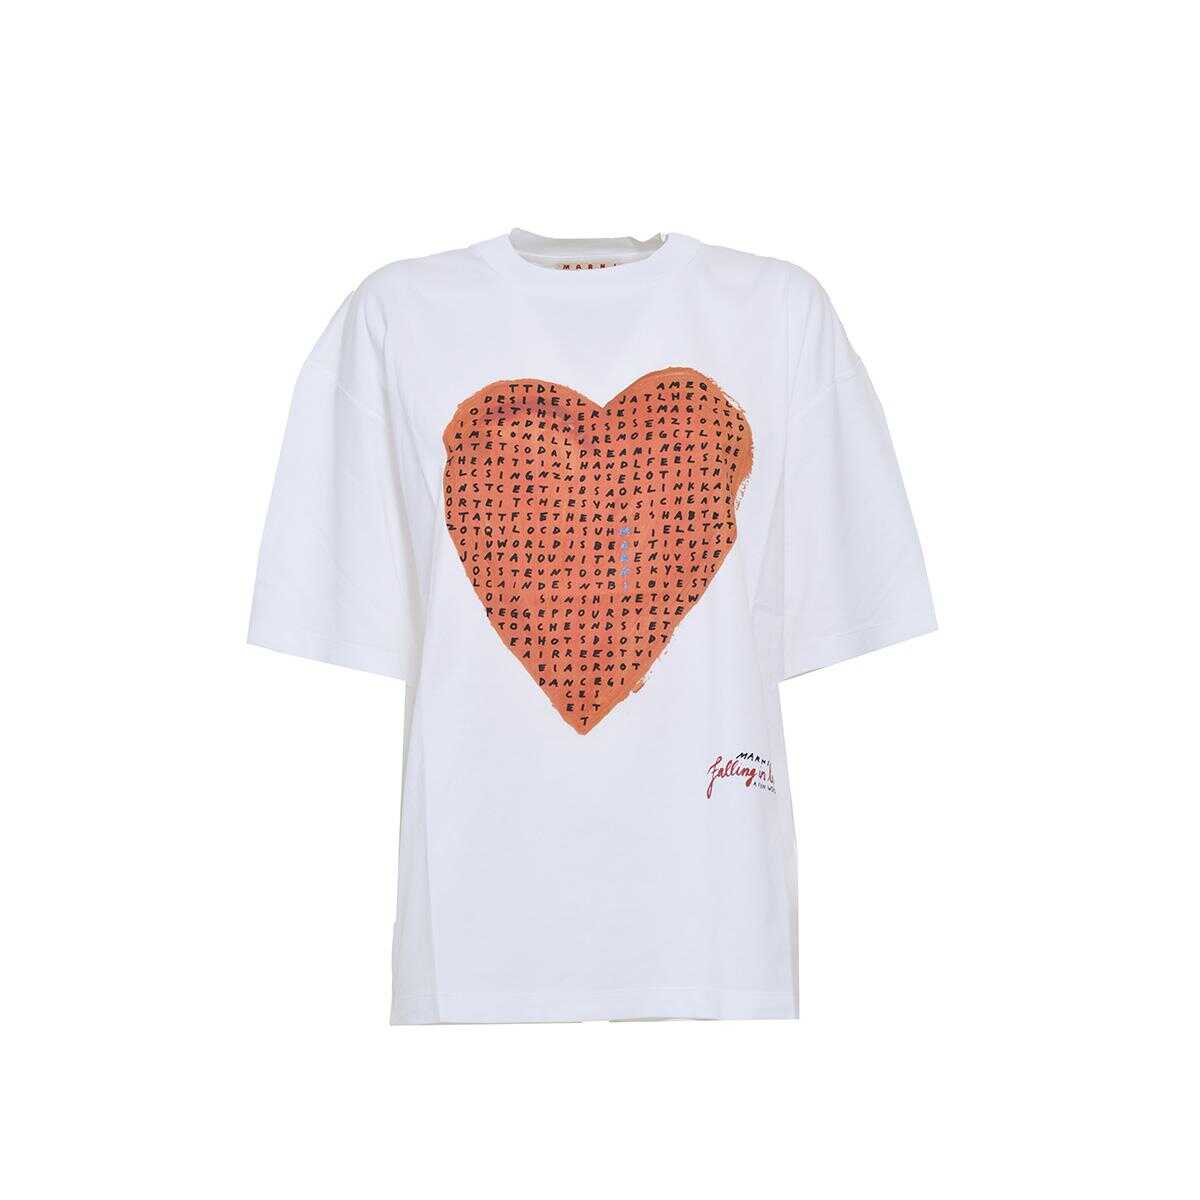 Marni MARNI White cotton T-shirt with red crucipuzzle heart print Marni RED